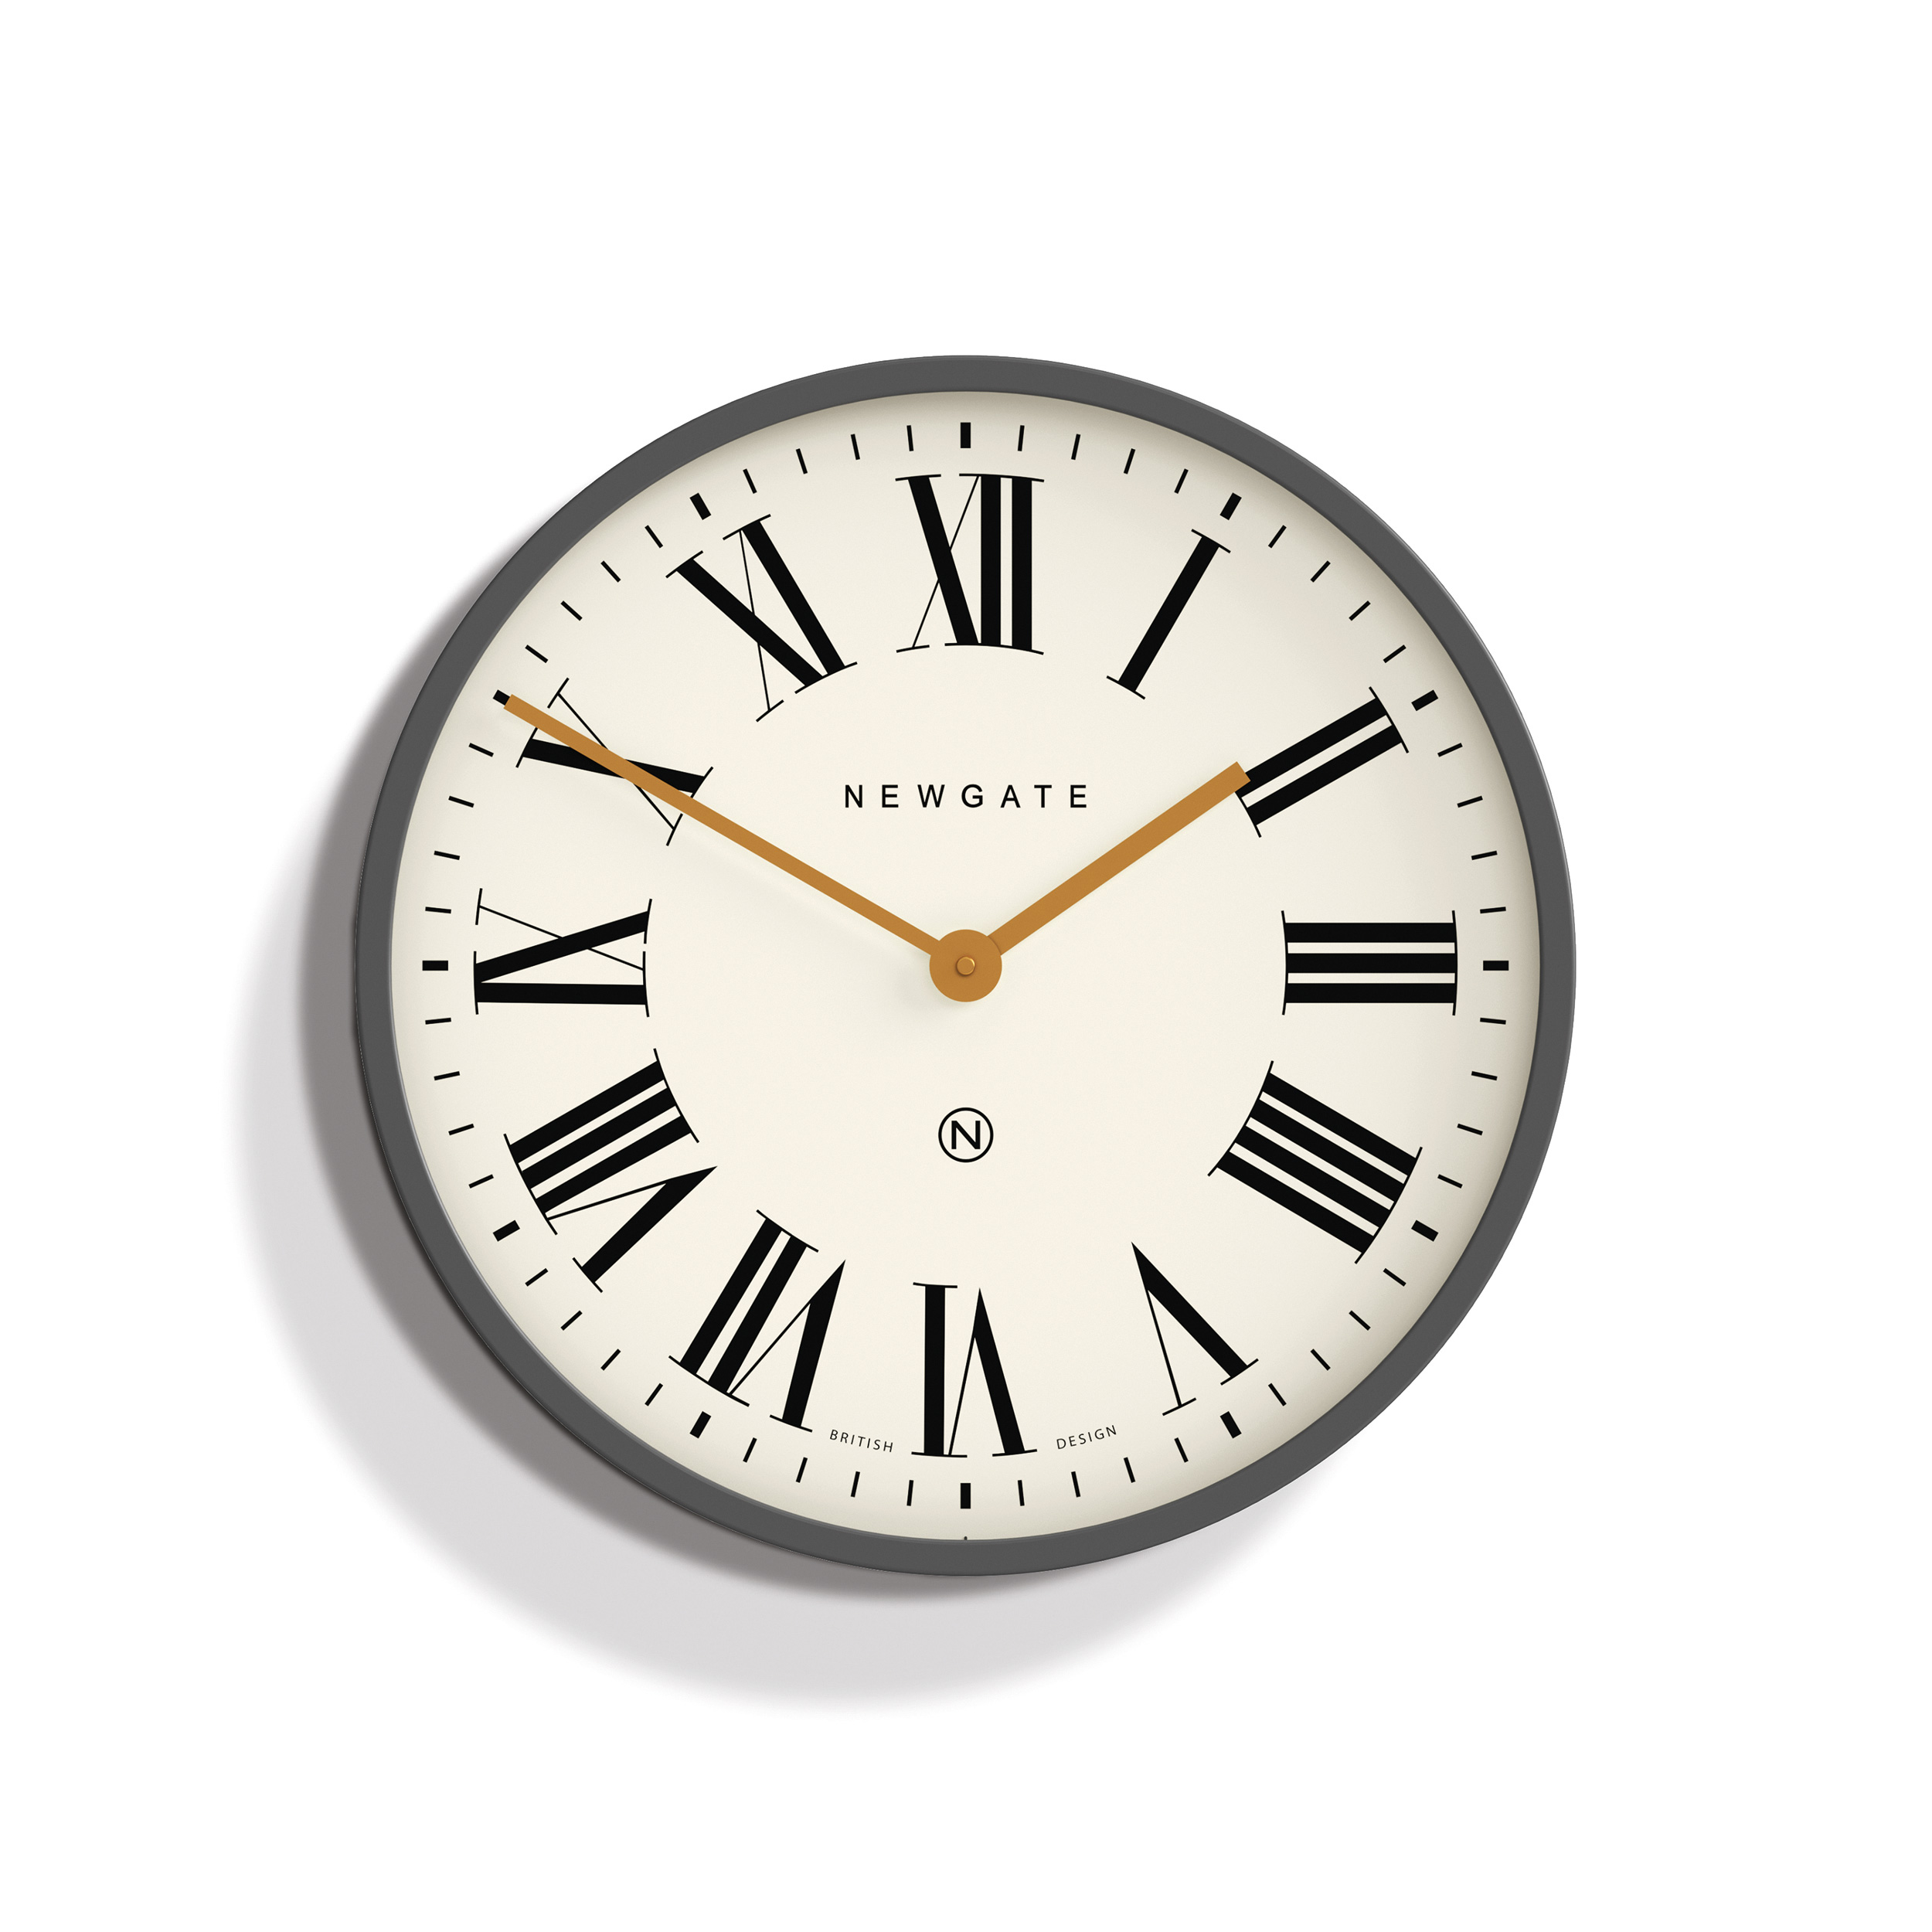 NEWGATE ’Mr Bulter’ Large Roman Numeral Wall Clock Grey/Cream